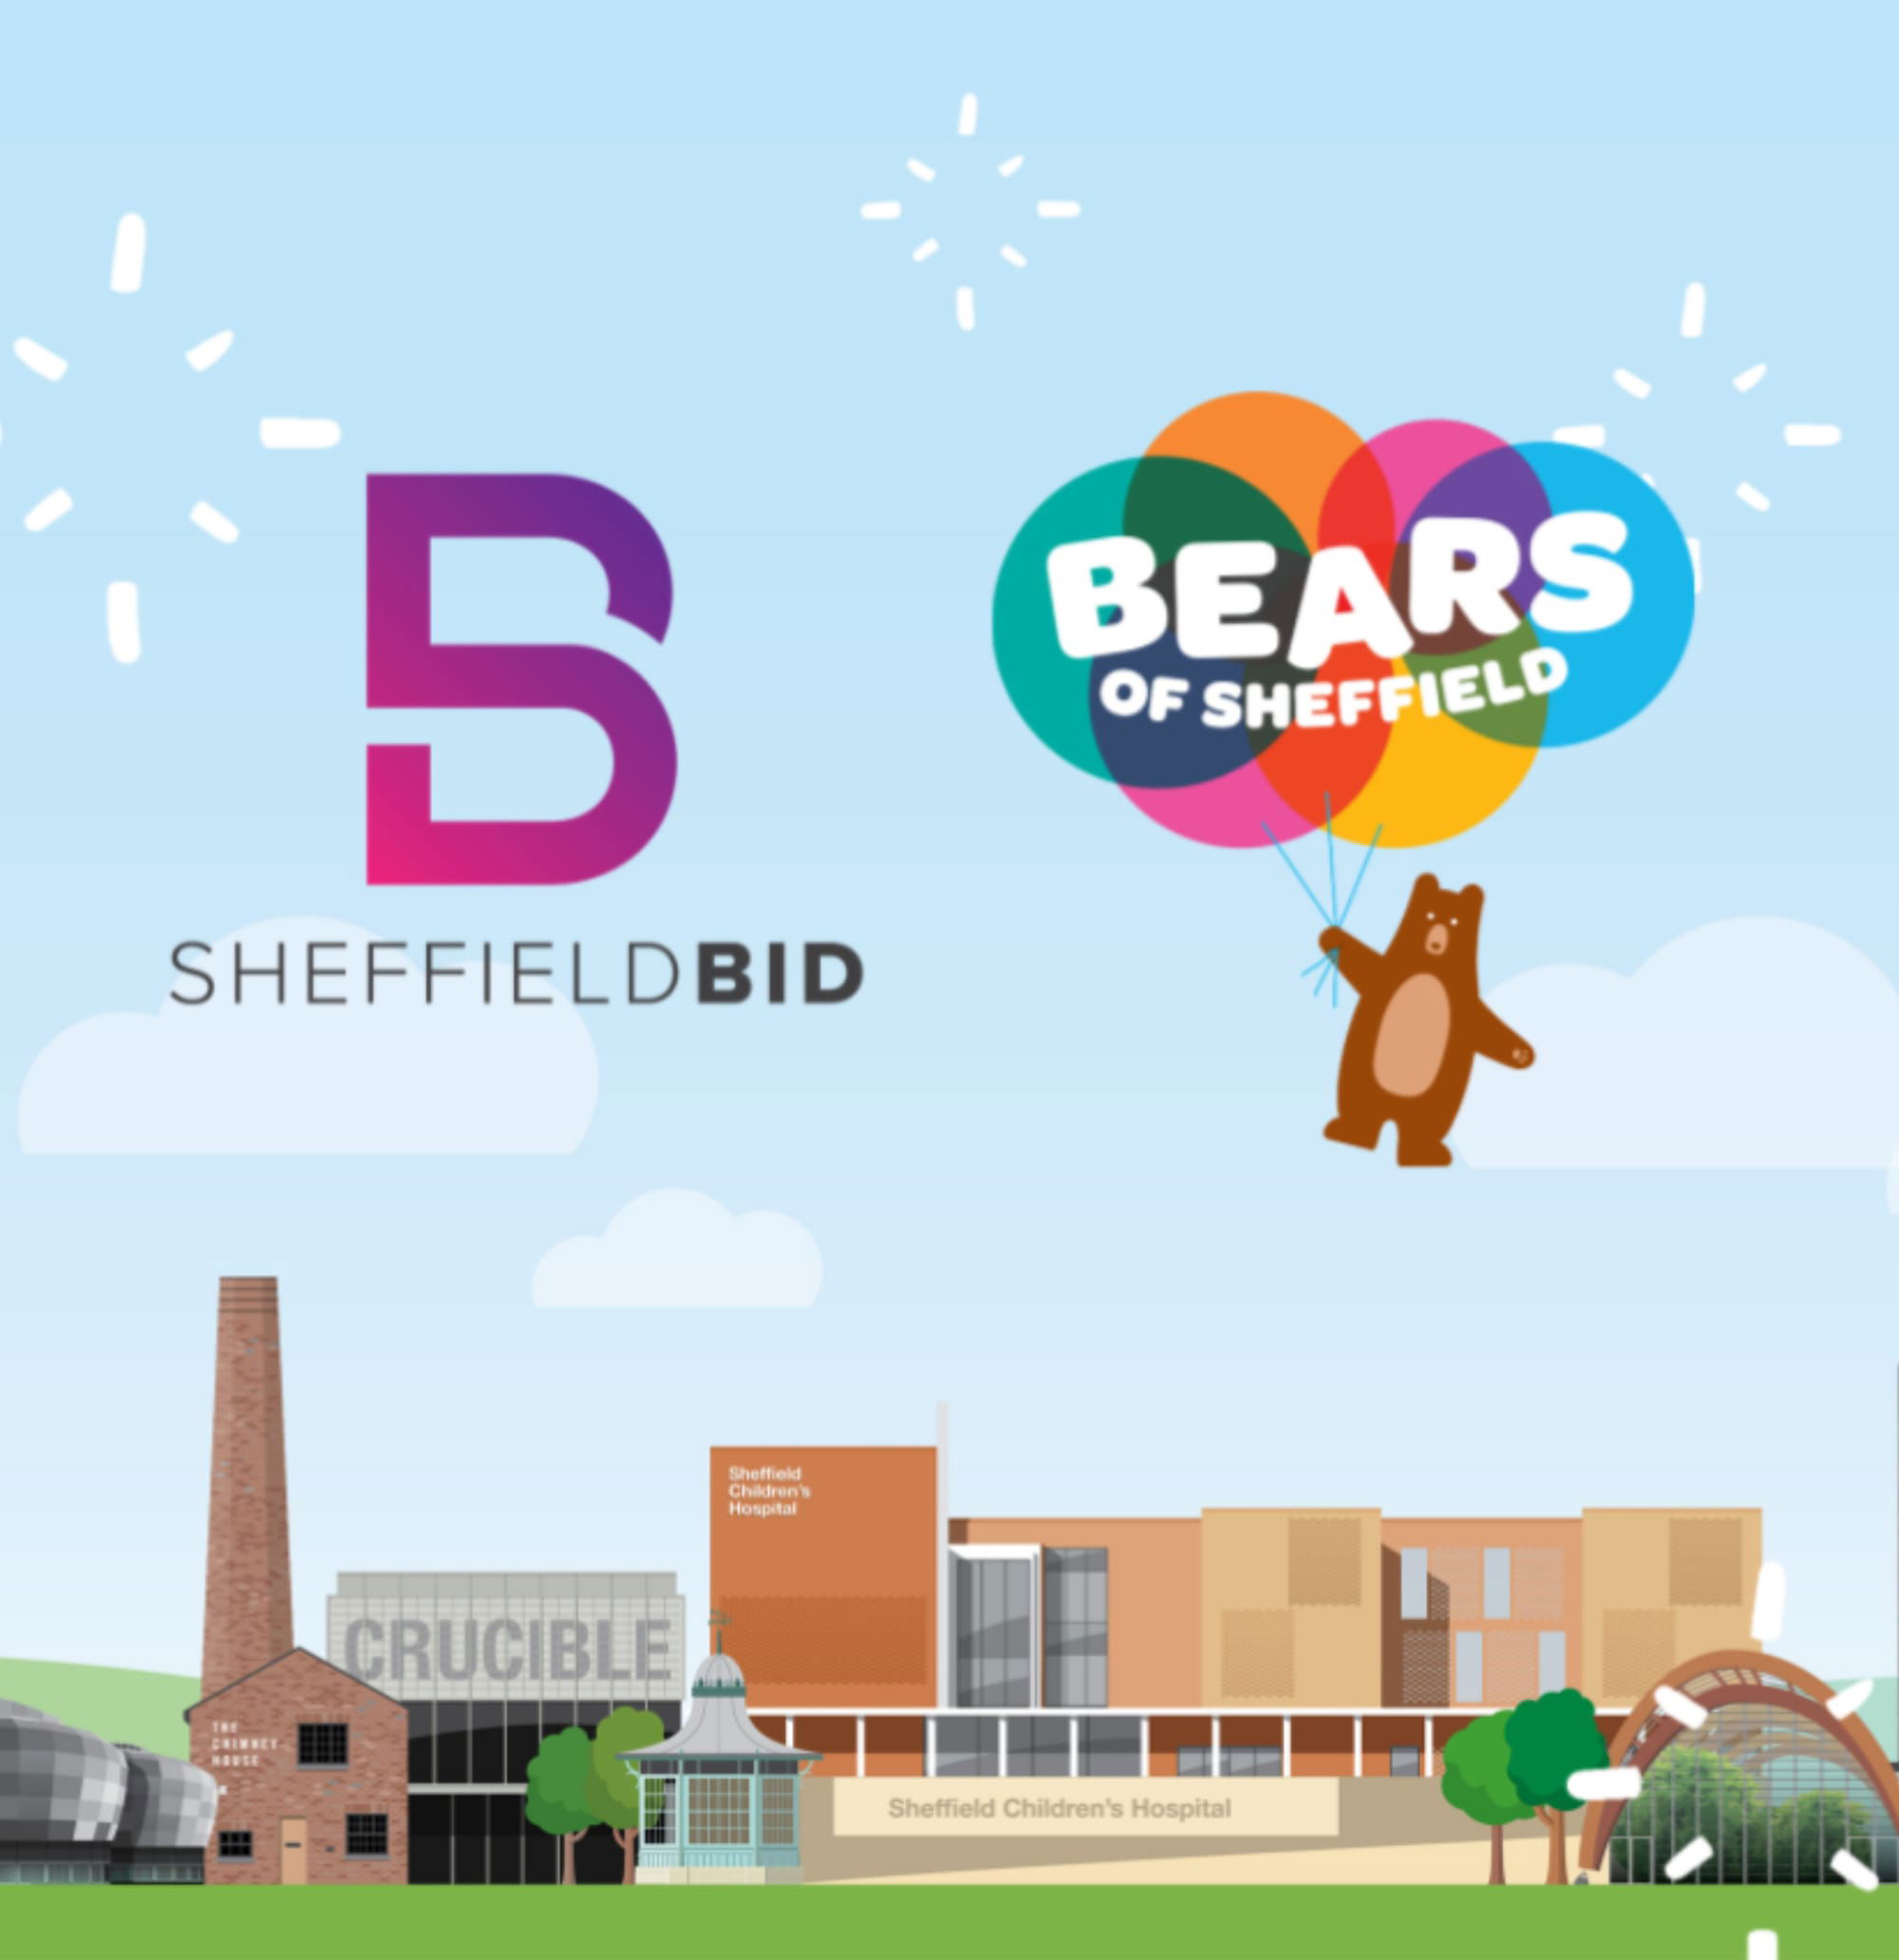 Sheffield BID announced as headline sponsor for the Bears of Sheffield 2021